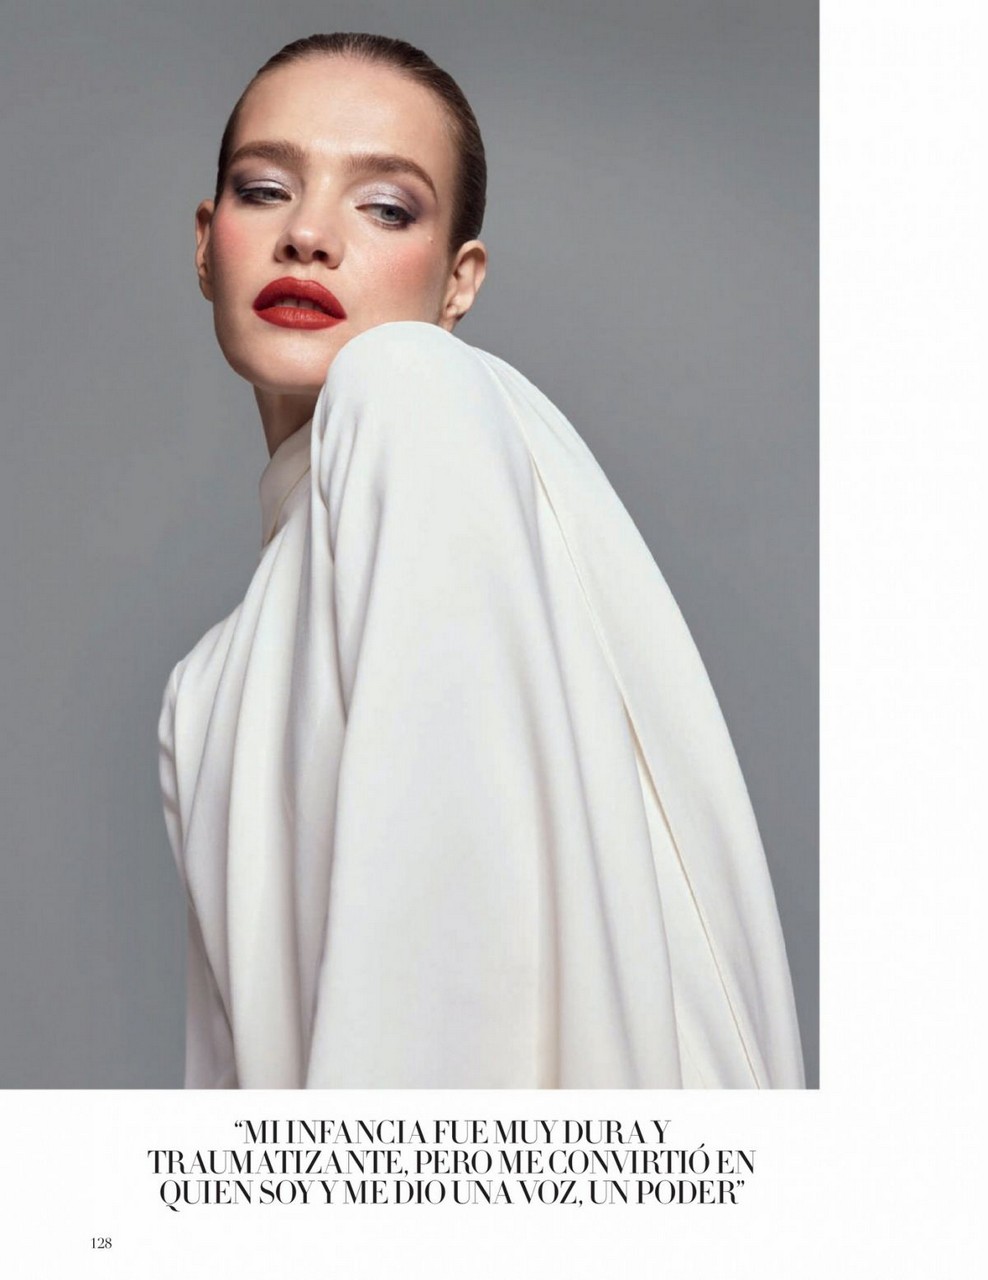 Natalia Vodianova For Harper S Bazaar Magazine Spain January